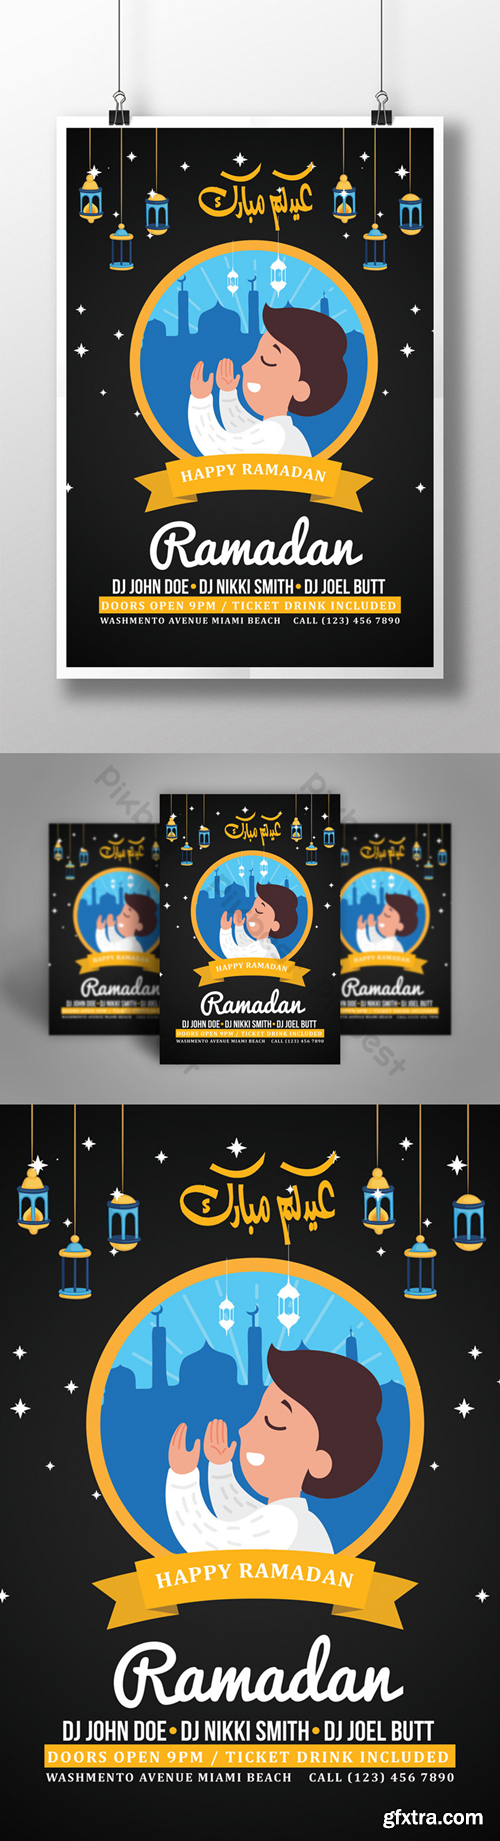 Chalkboard Ramadan Event Flyer Templates Template PSD